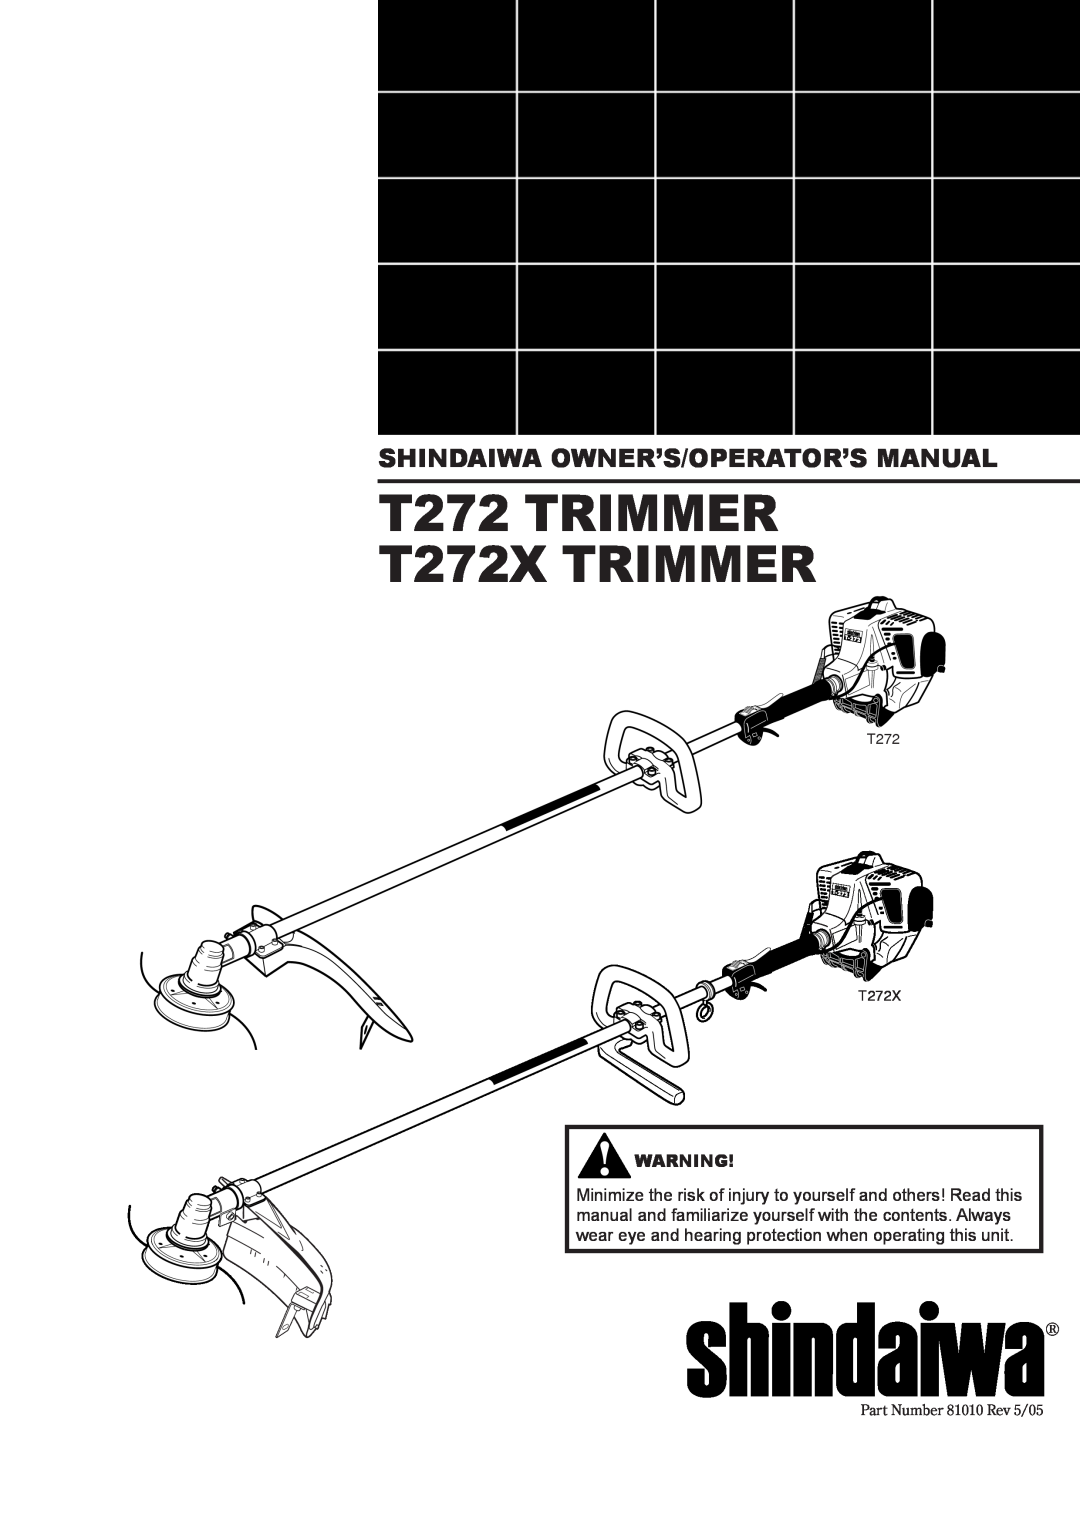 Shindaiwa 81010 manual T272 TRIMMER T272X TRIMMER, Shindaiwa Owner’S/Operator’S Manual, T272 T272X 